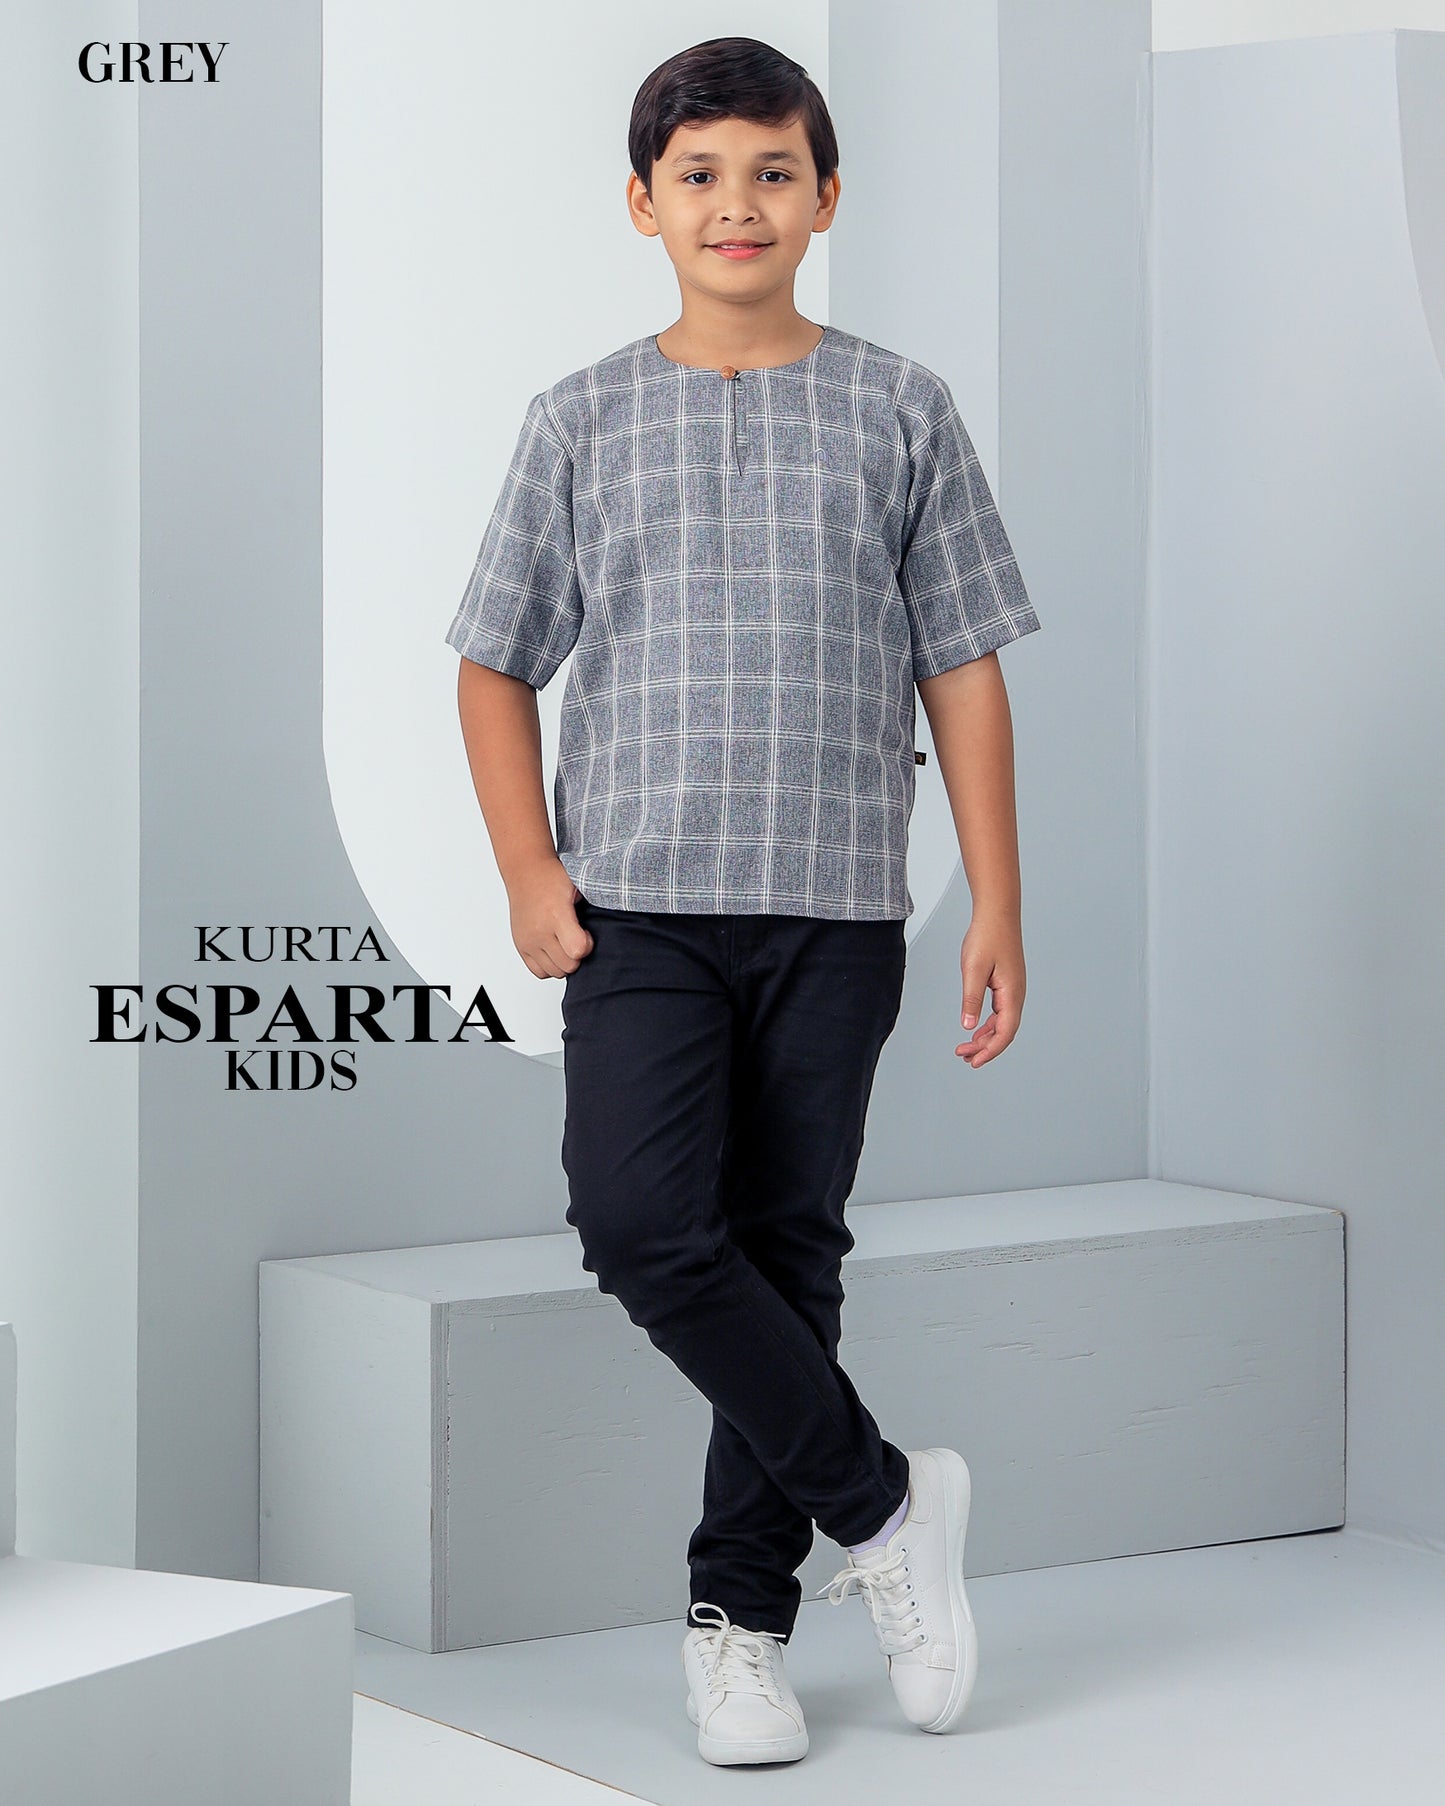 Kurta Esparta Kids - Grey